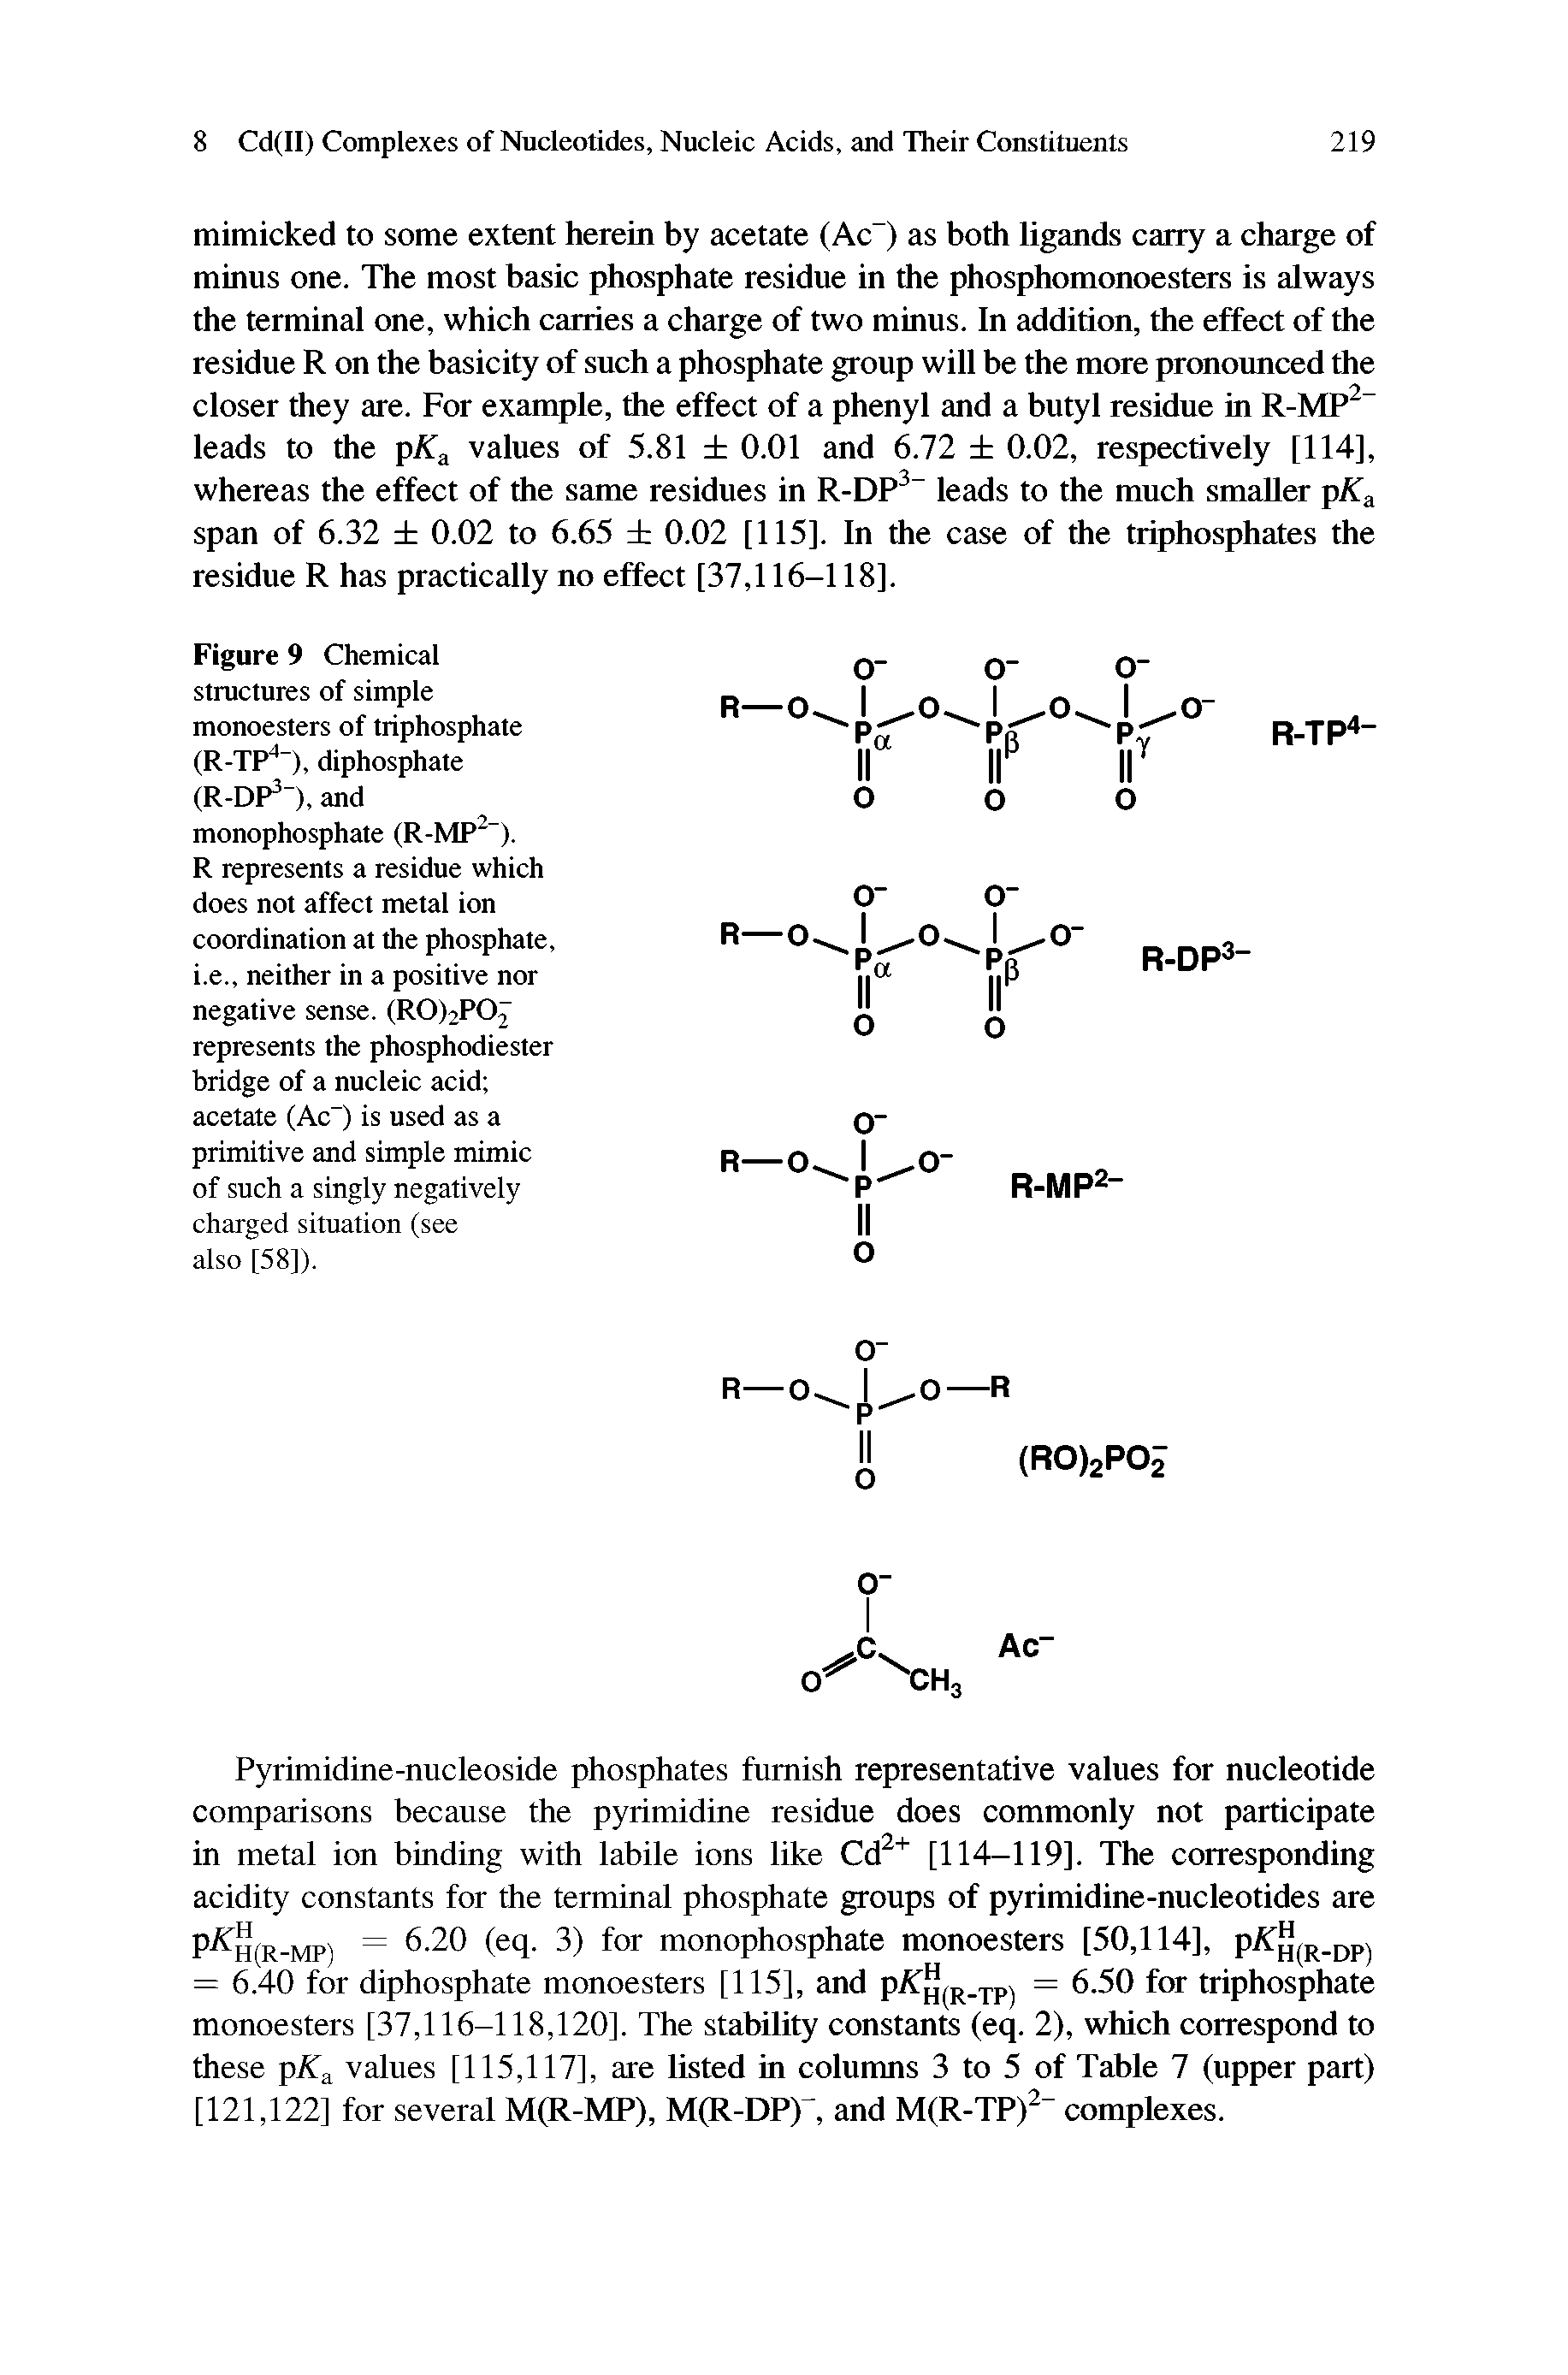 Figure 9 Chemical structures of simple monoesters of triphosphate (R-TP ), diphosphate (R-DP ), and monophosphate (R-MP ).